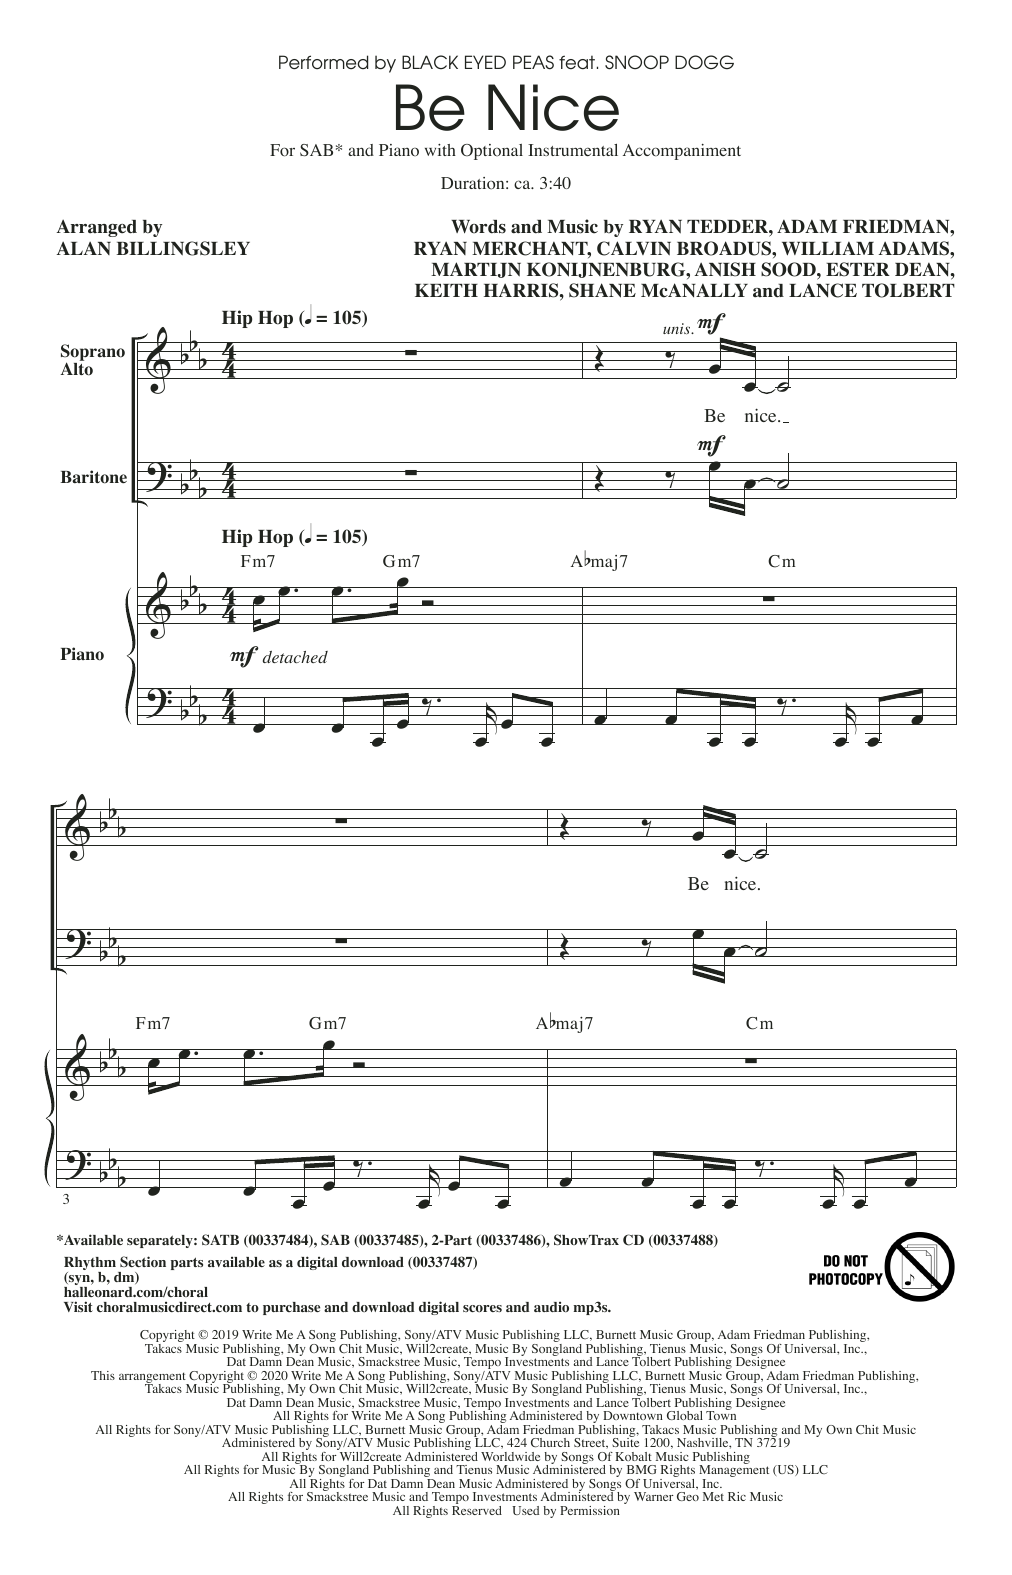 Black Eyed Peas Be Nice (feat. Snoop Dogg) (arr. Alan Billingsley) Sheet Music Notes & Chords for SAB Choir - Download or Print PDF